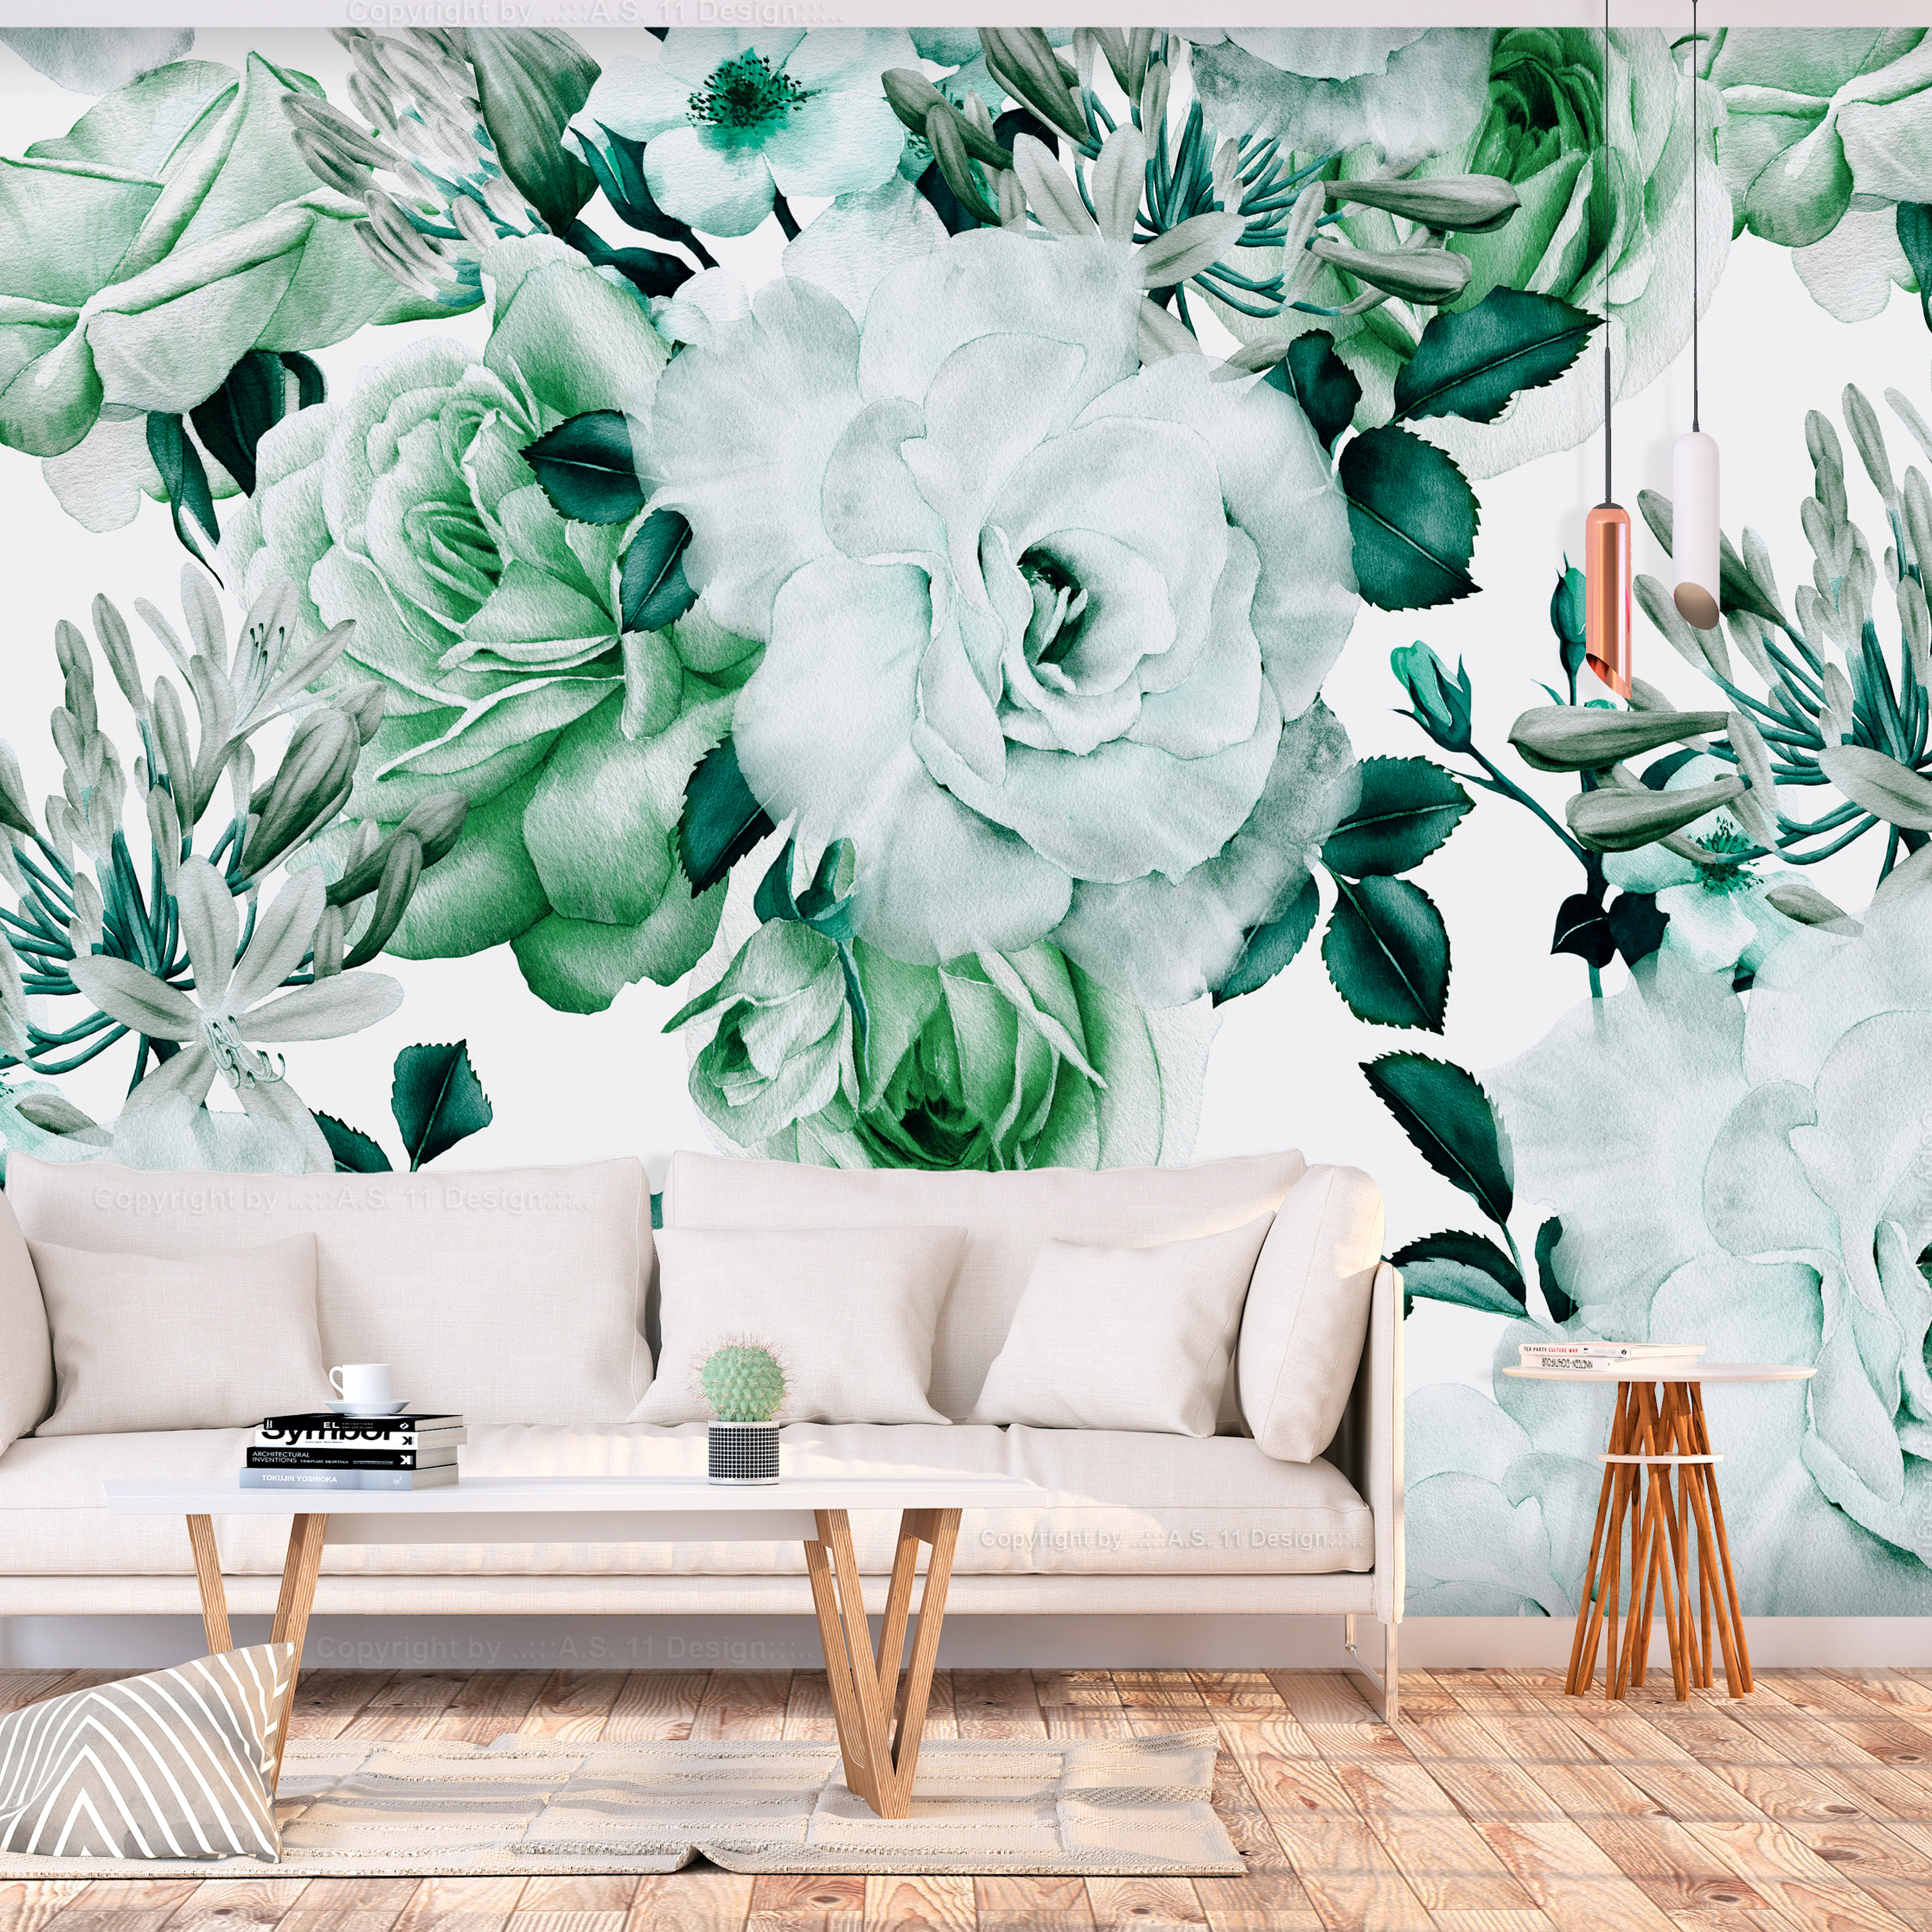 Self-adhesive Wallpaper - Sentimental Garden (Green) - 147x105